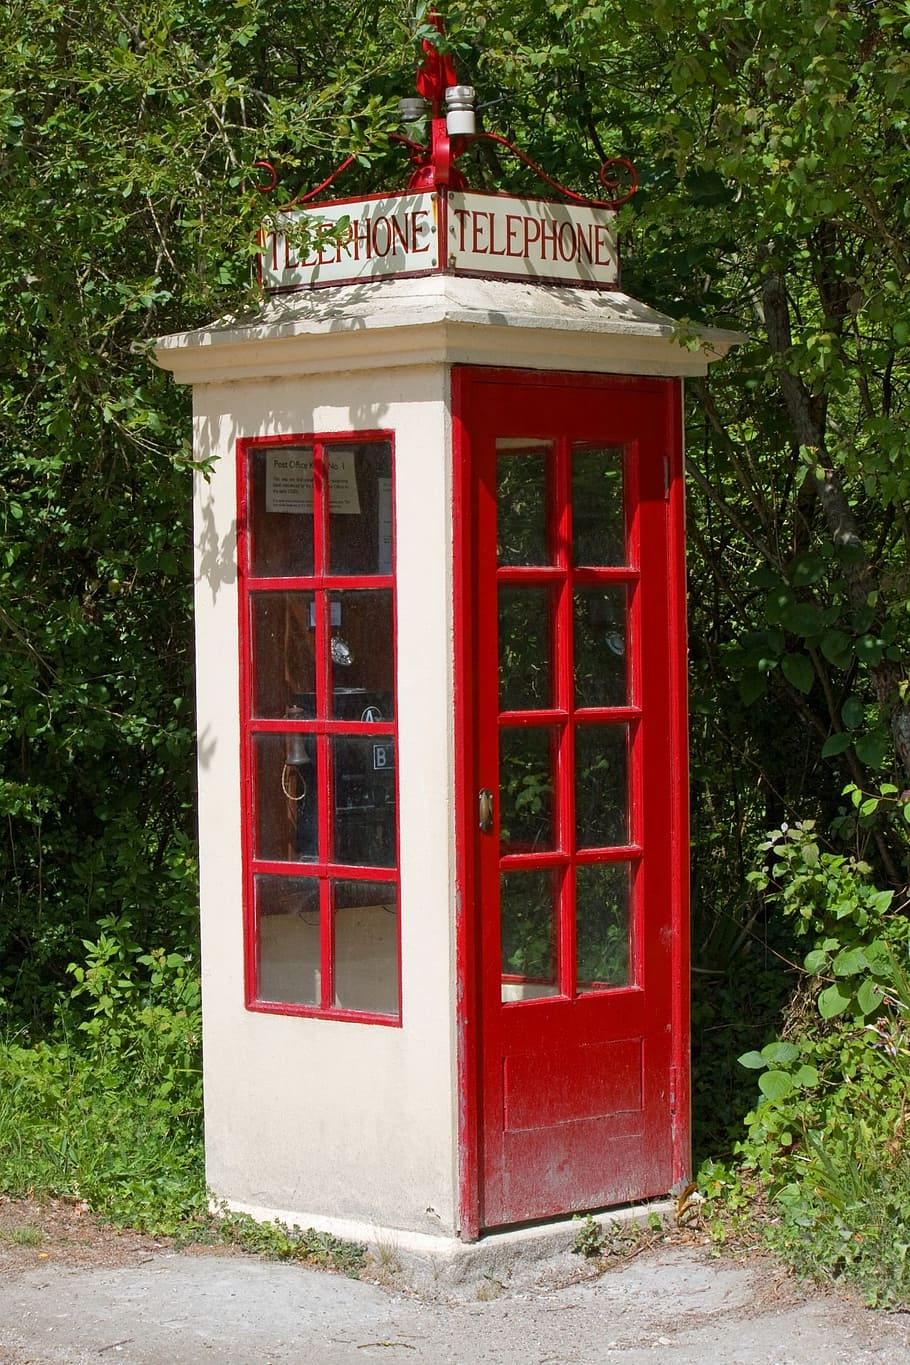 kotak telepon, model tahun, lama, bahasa Inggris, inggris, telepon, luntur, usang, kuno, merah